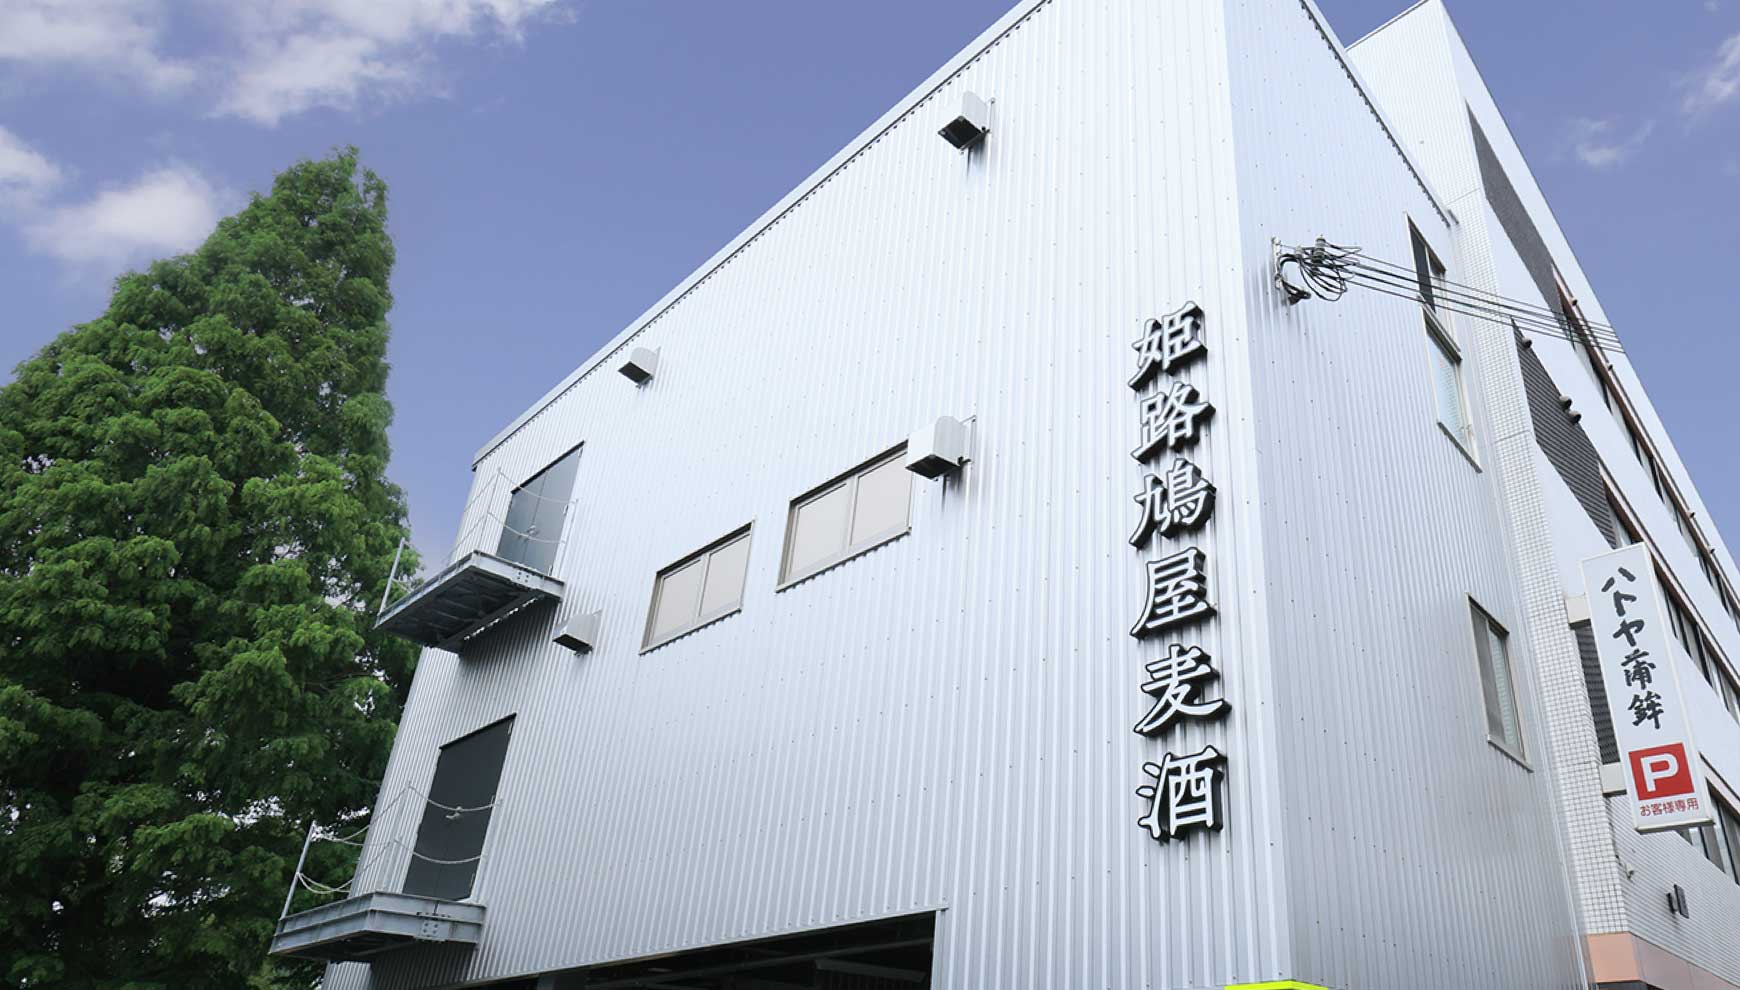 姫路鳩屋麦酒の醸造所の外観写真